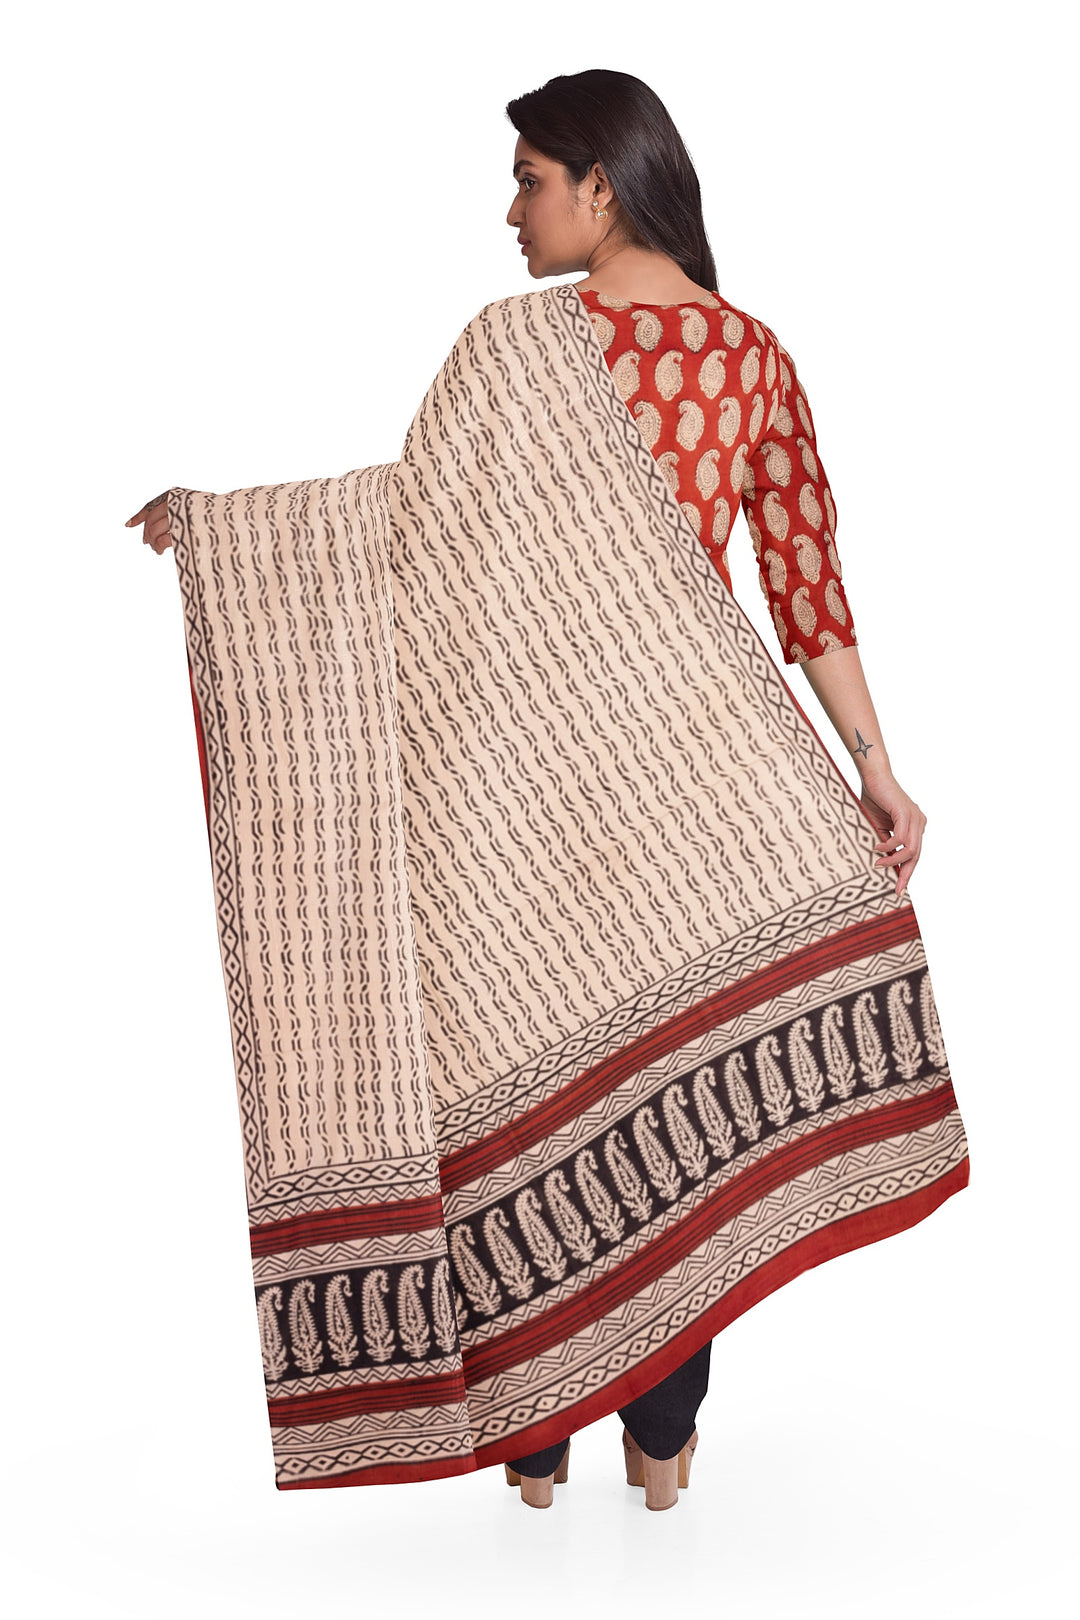 Red 3-Piece Mulmul Cotton Salwar Suit Material 10068594